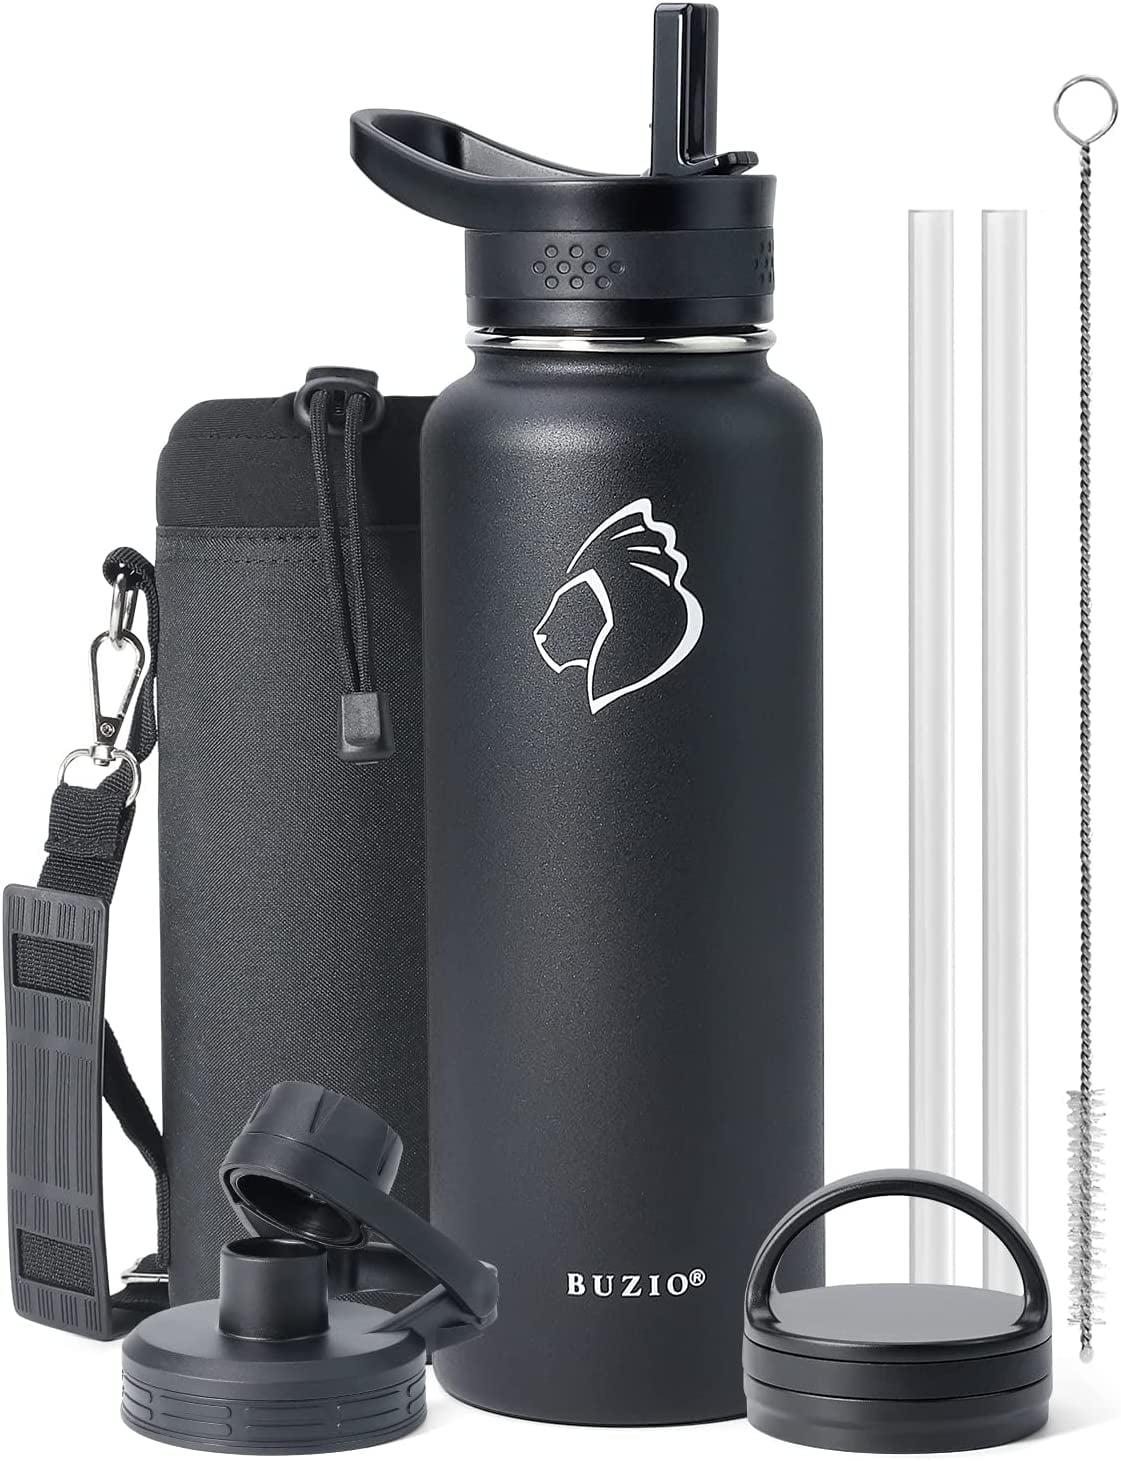 AXiOFiT Vacuum Insulated Sports Bottle – 40 Oz